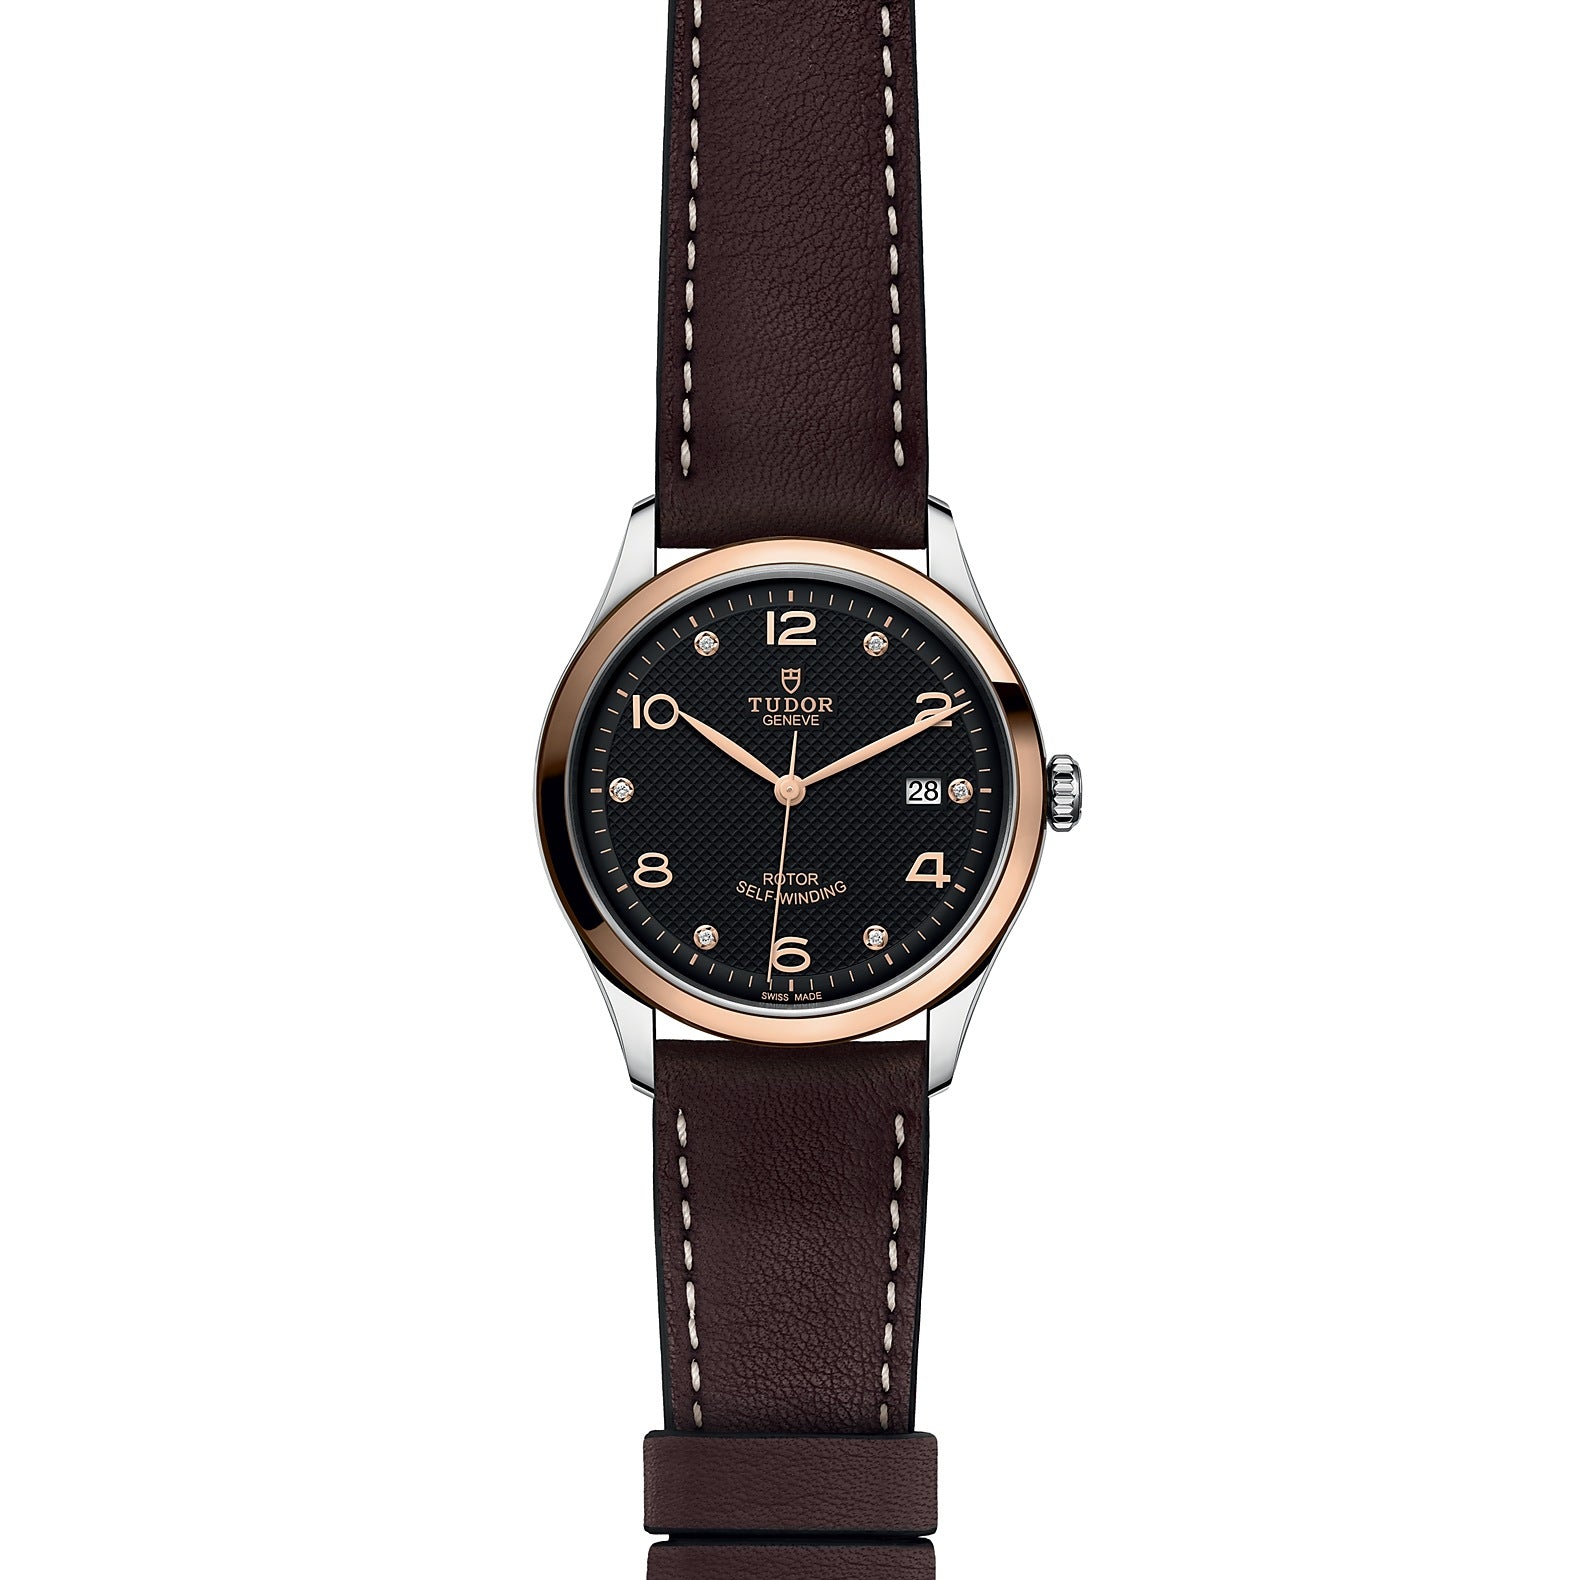 Tudor 1926 Watch, 39mm Black Dial, M91551-0008